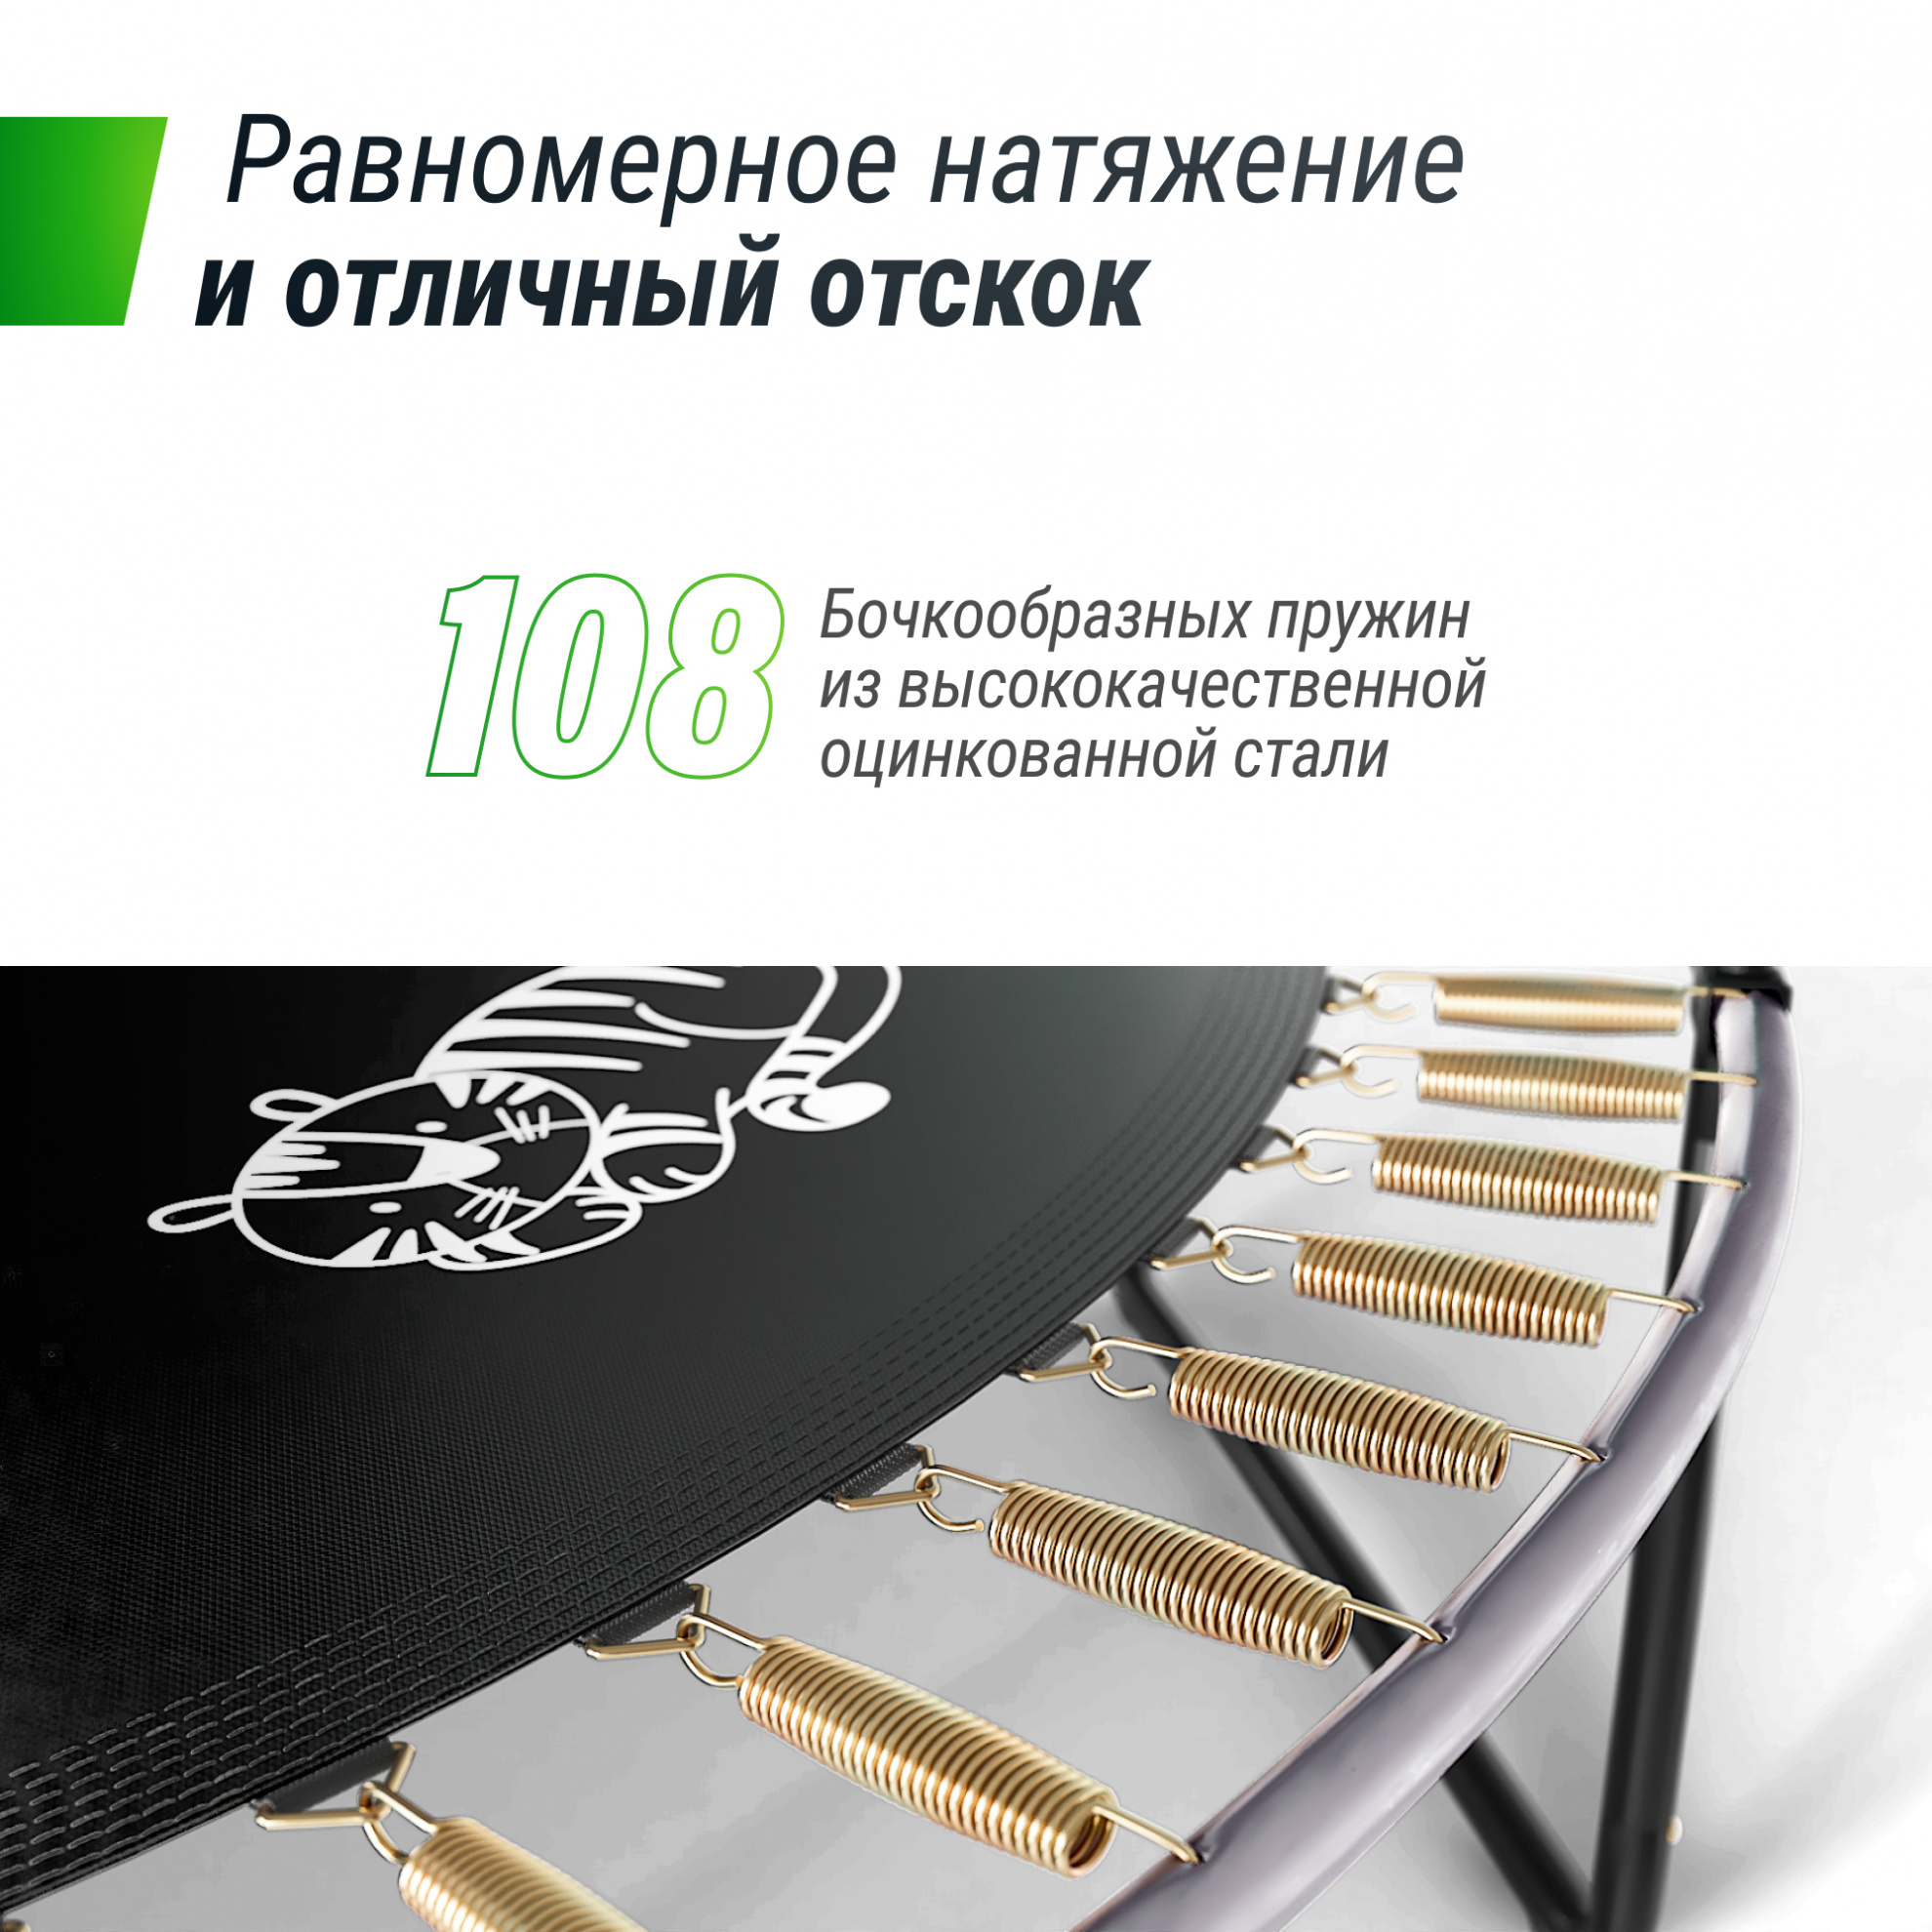 Unix Line Supreme Game 16FT / 488 см (Green) из каталога батутов с защитной сеткой в Москве по цене 59890 ₽